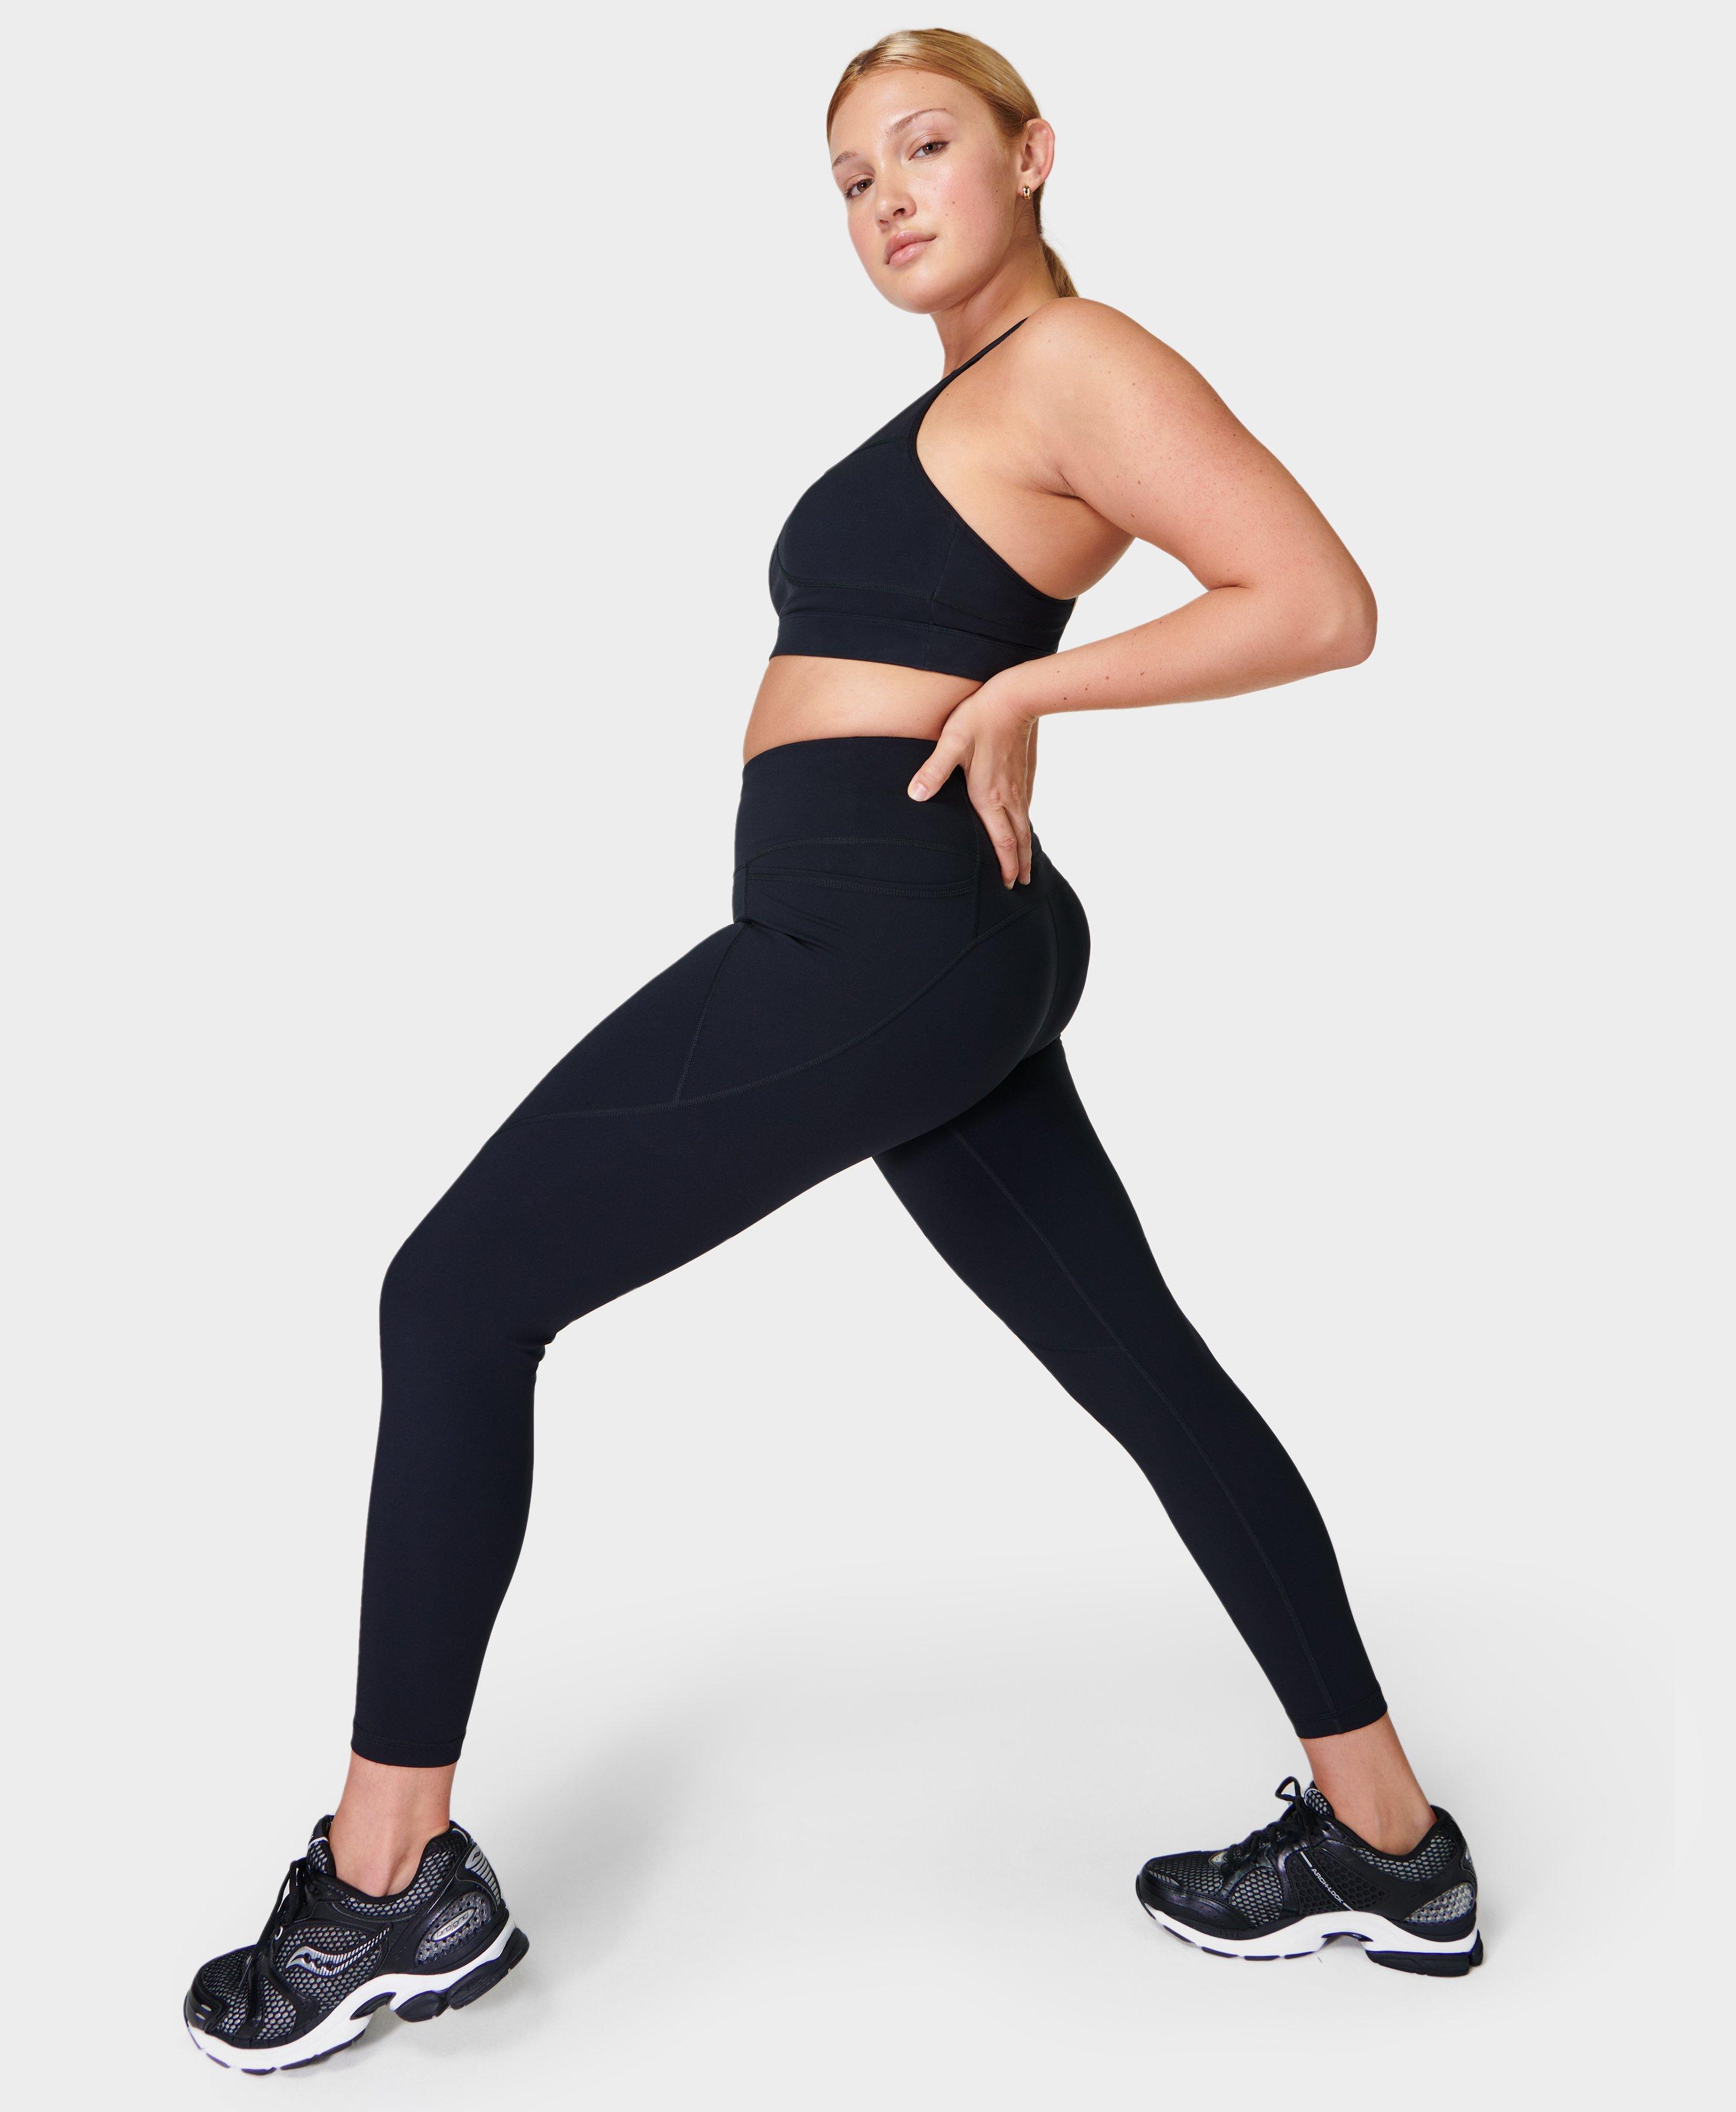 women's black workout leggings